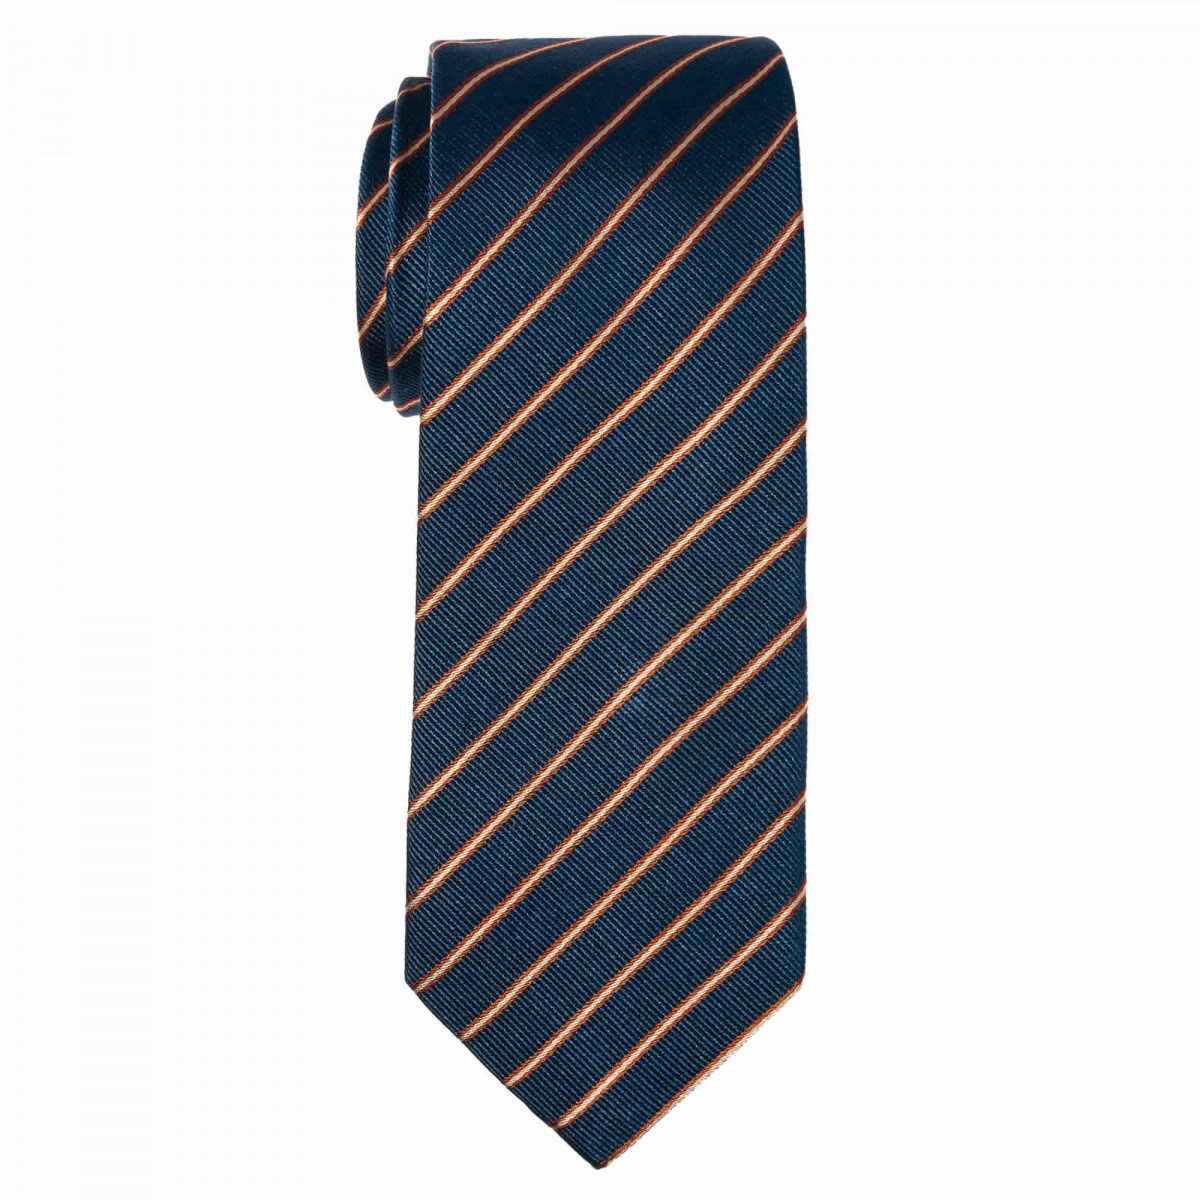 Cravate slim rayure bicolore - Soie Bleu marine